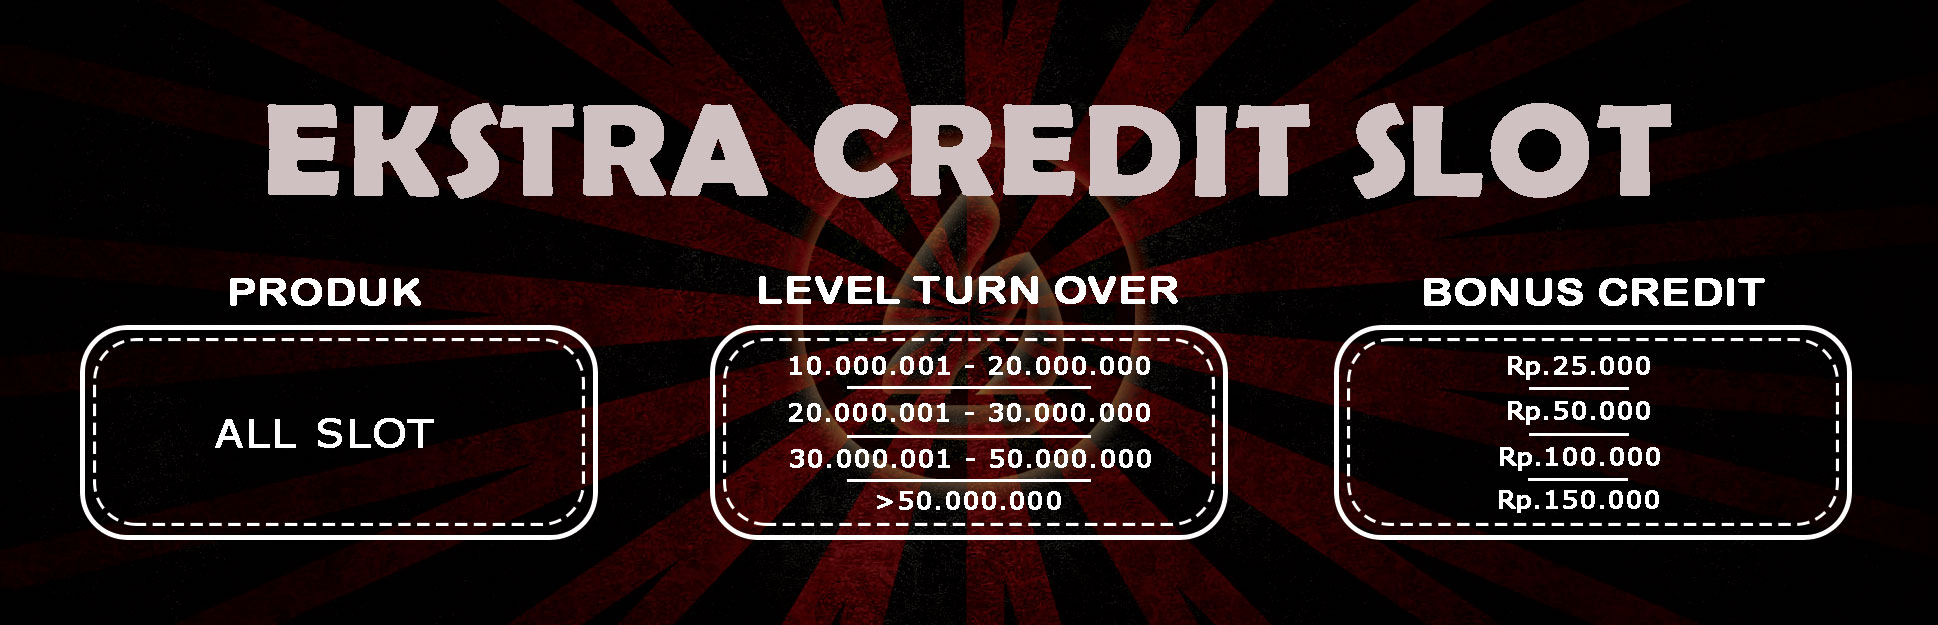 Extra Credit Slot